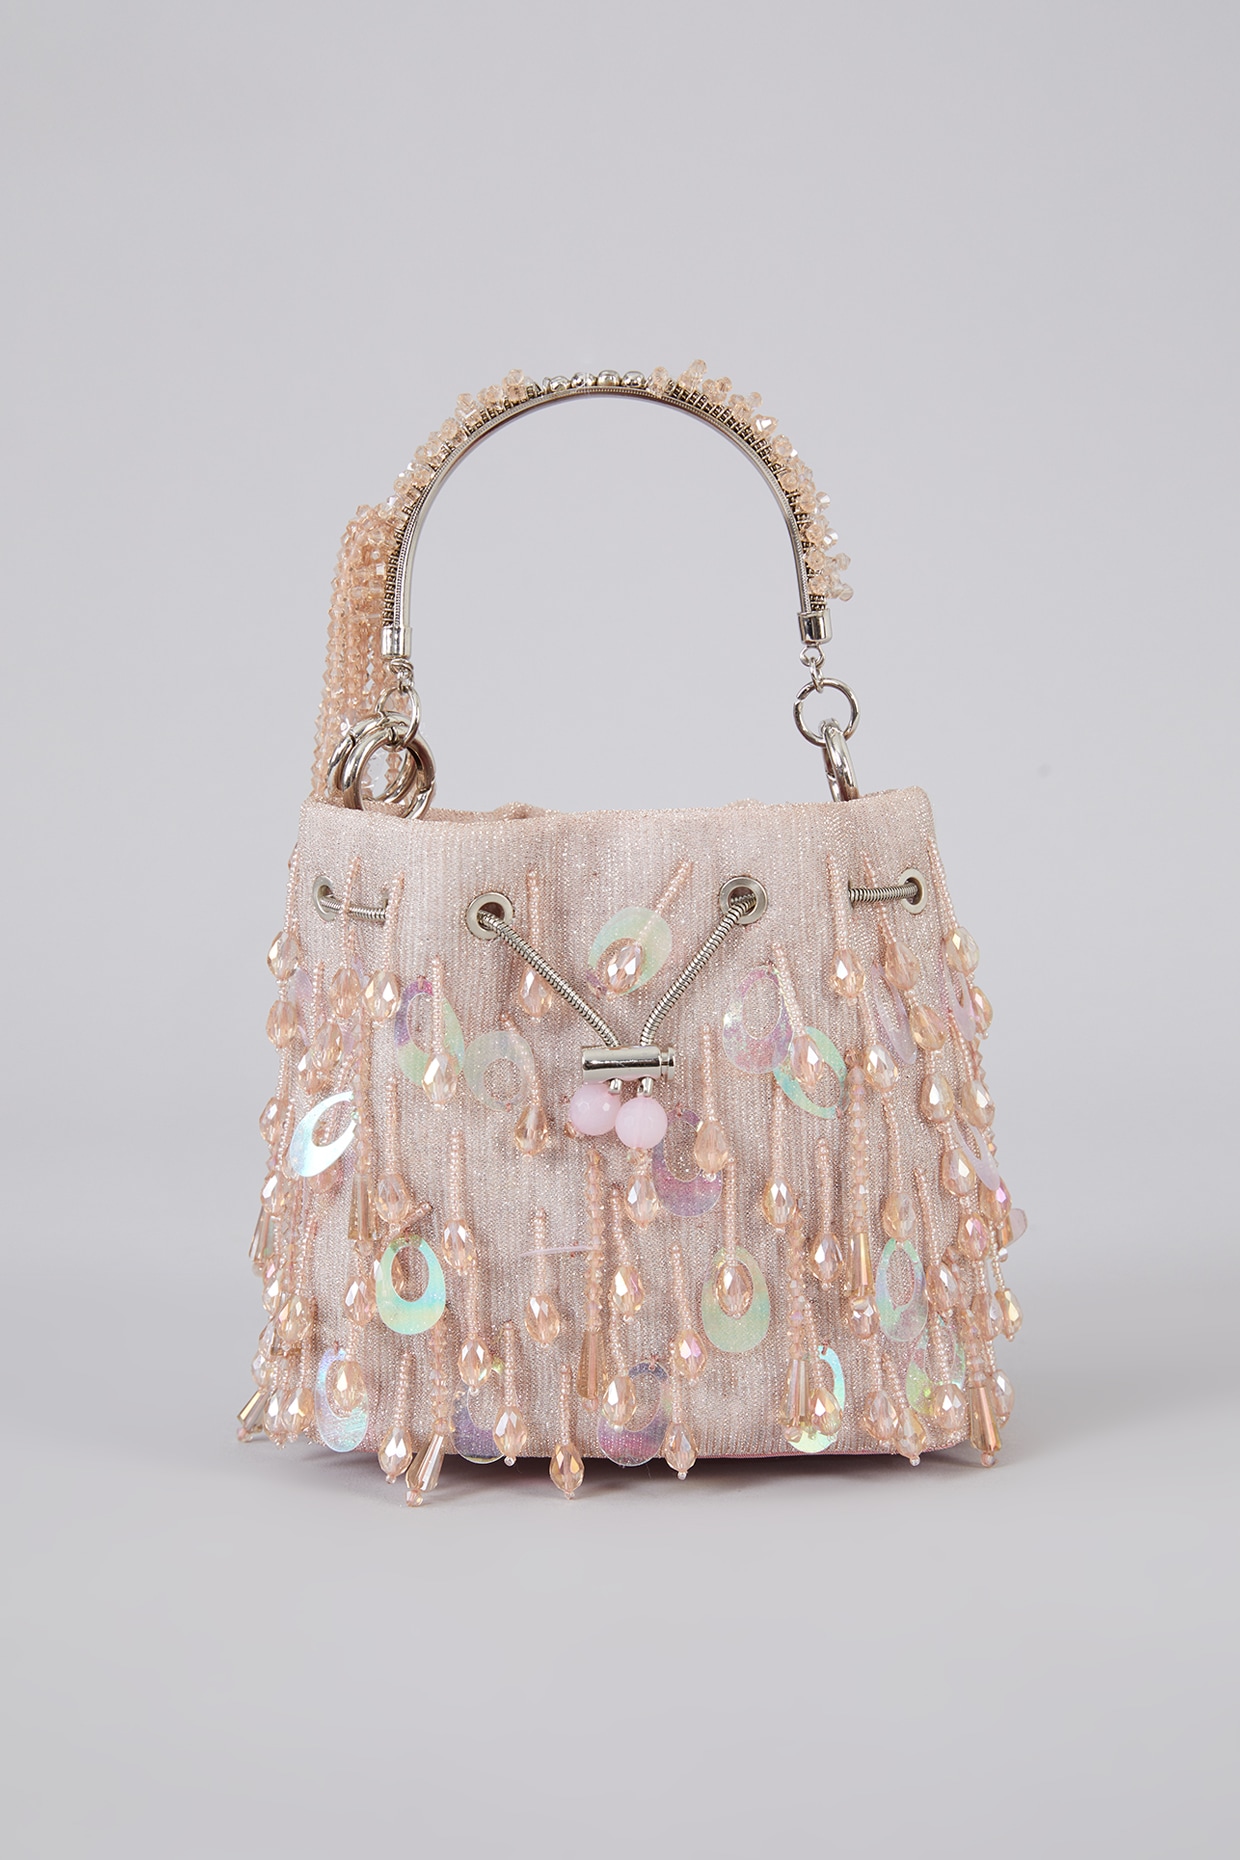 Designer handbag gift guide: The 14 best bags to splurge on this gifting  season - nj.com